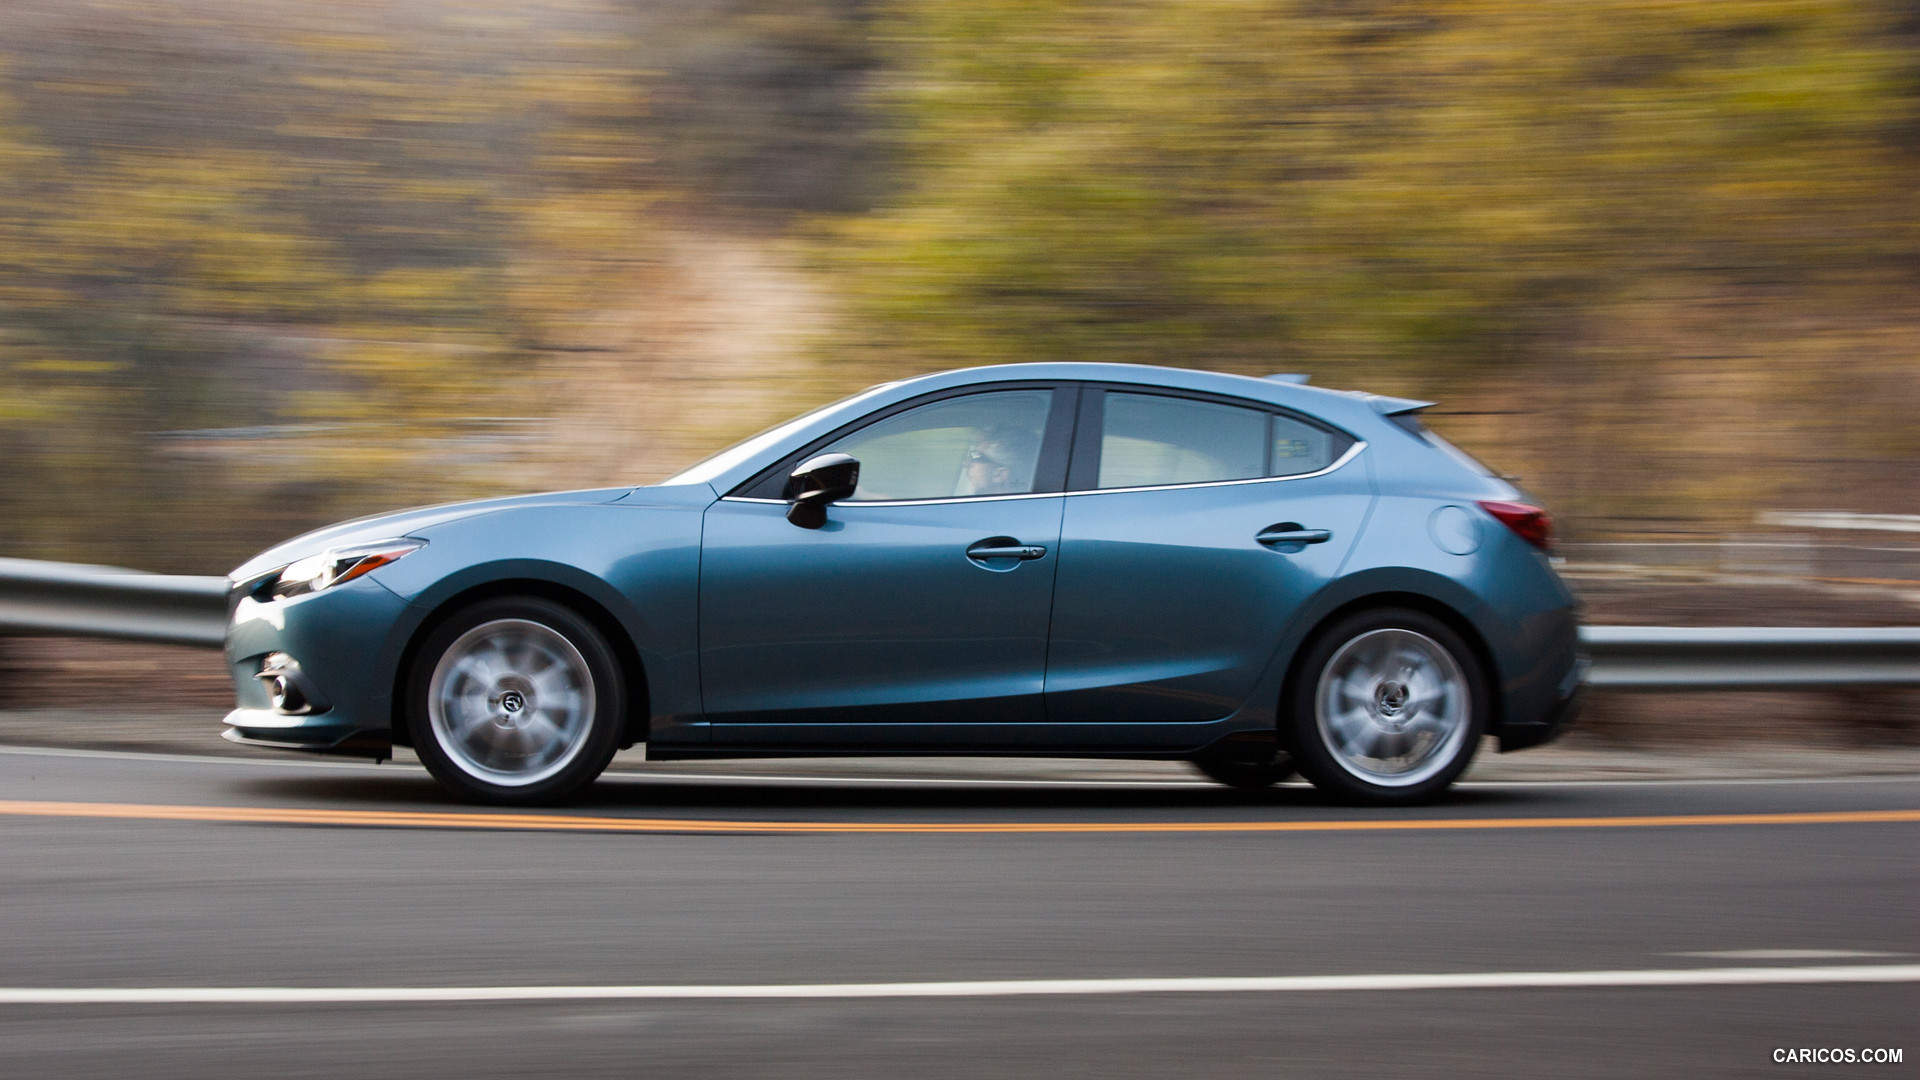 2015 Mazda 3 5D s Touring 6MT (Blue Reflex)  - Side, #9 of 27